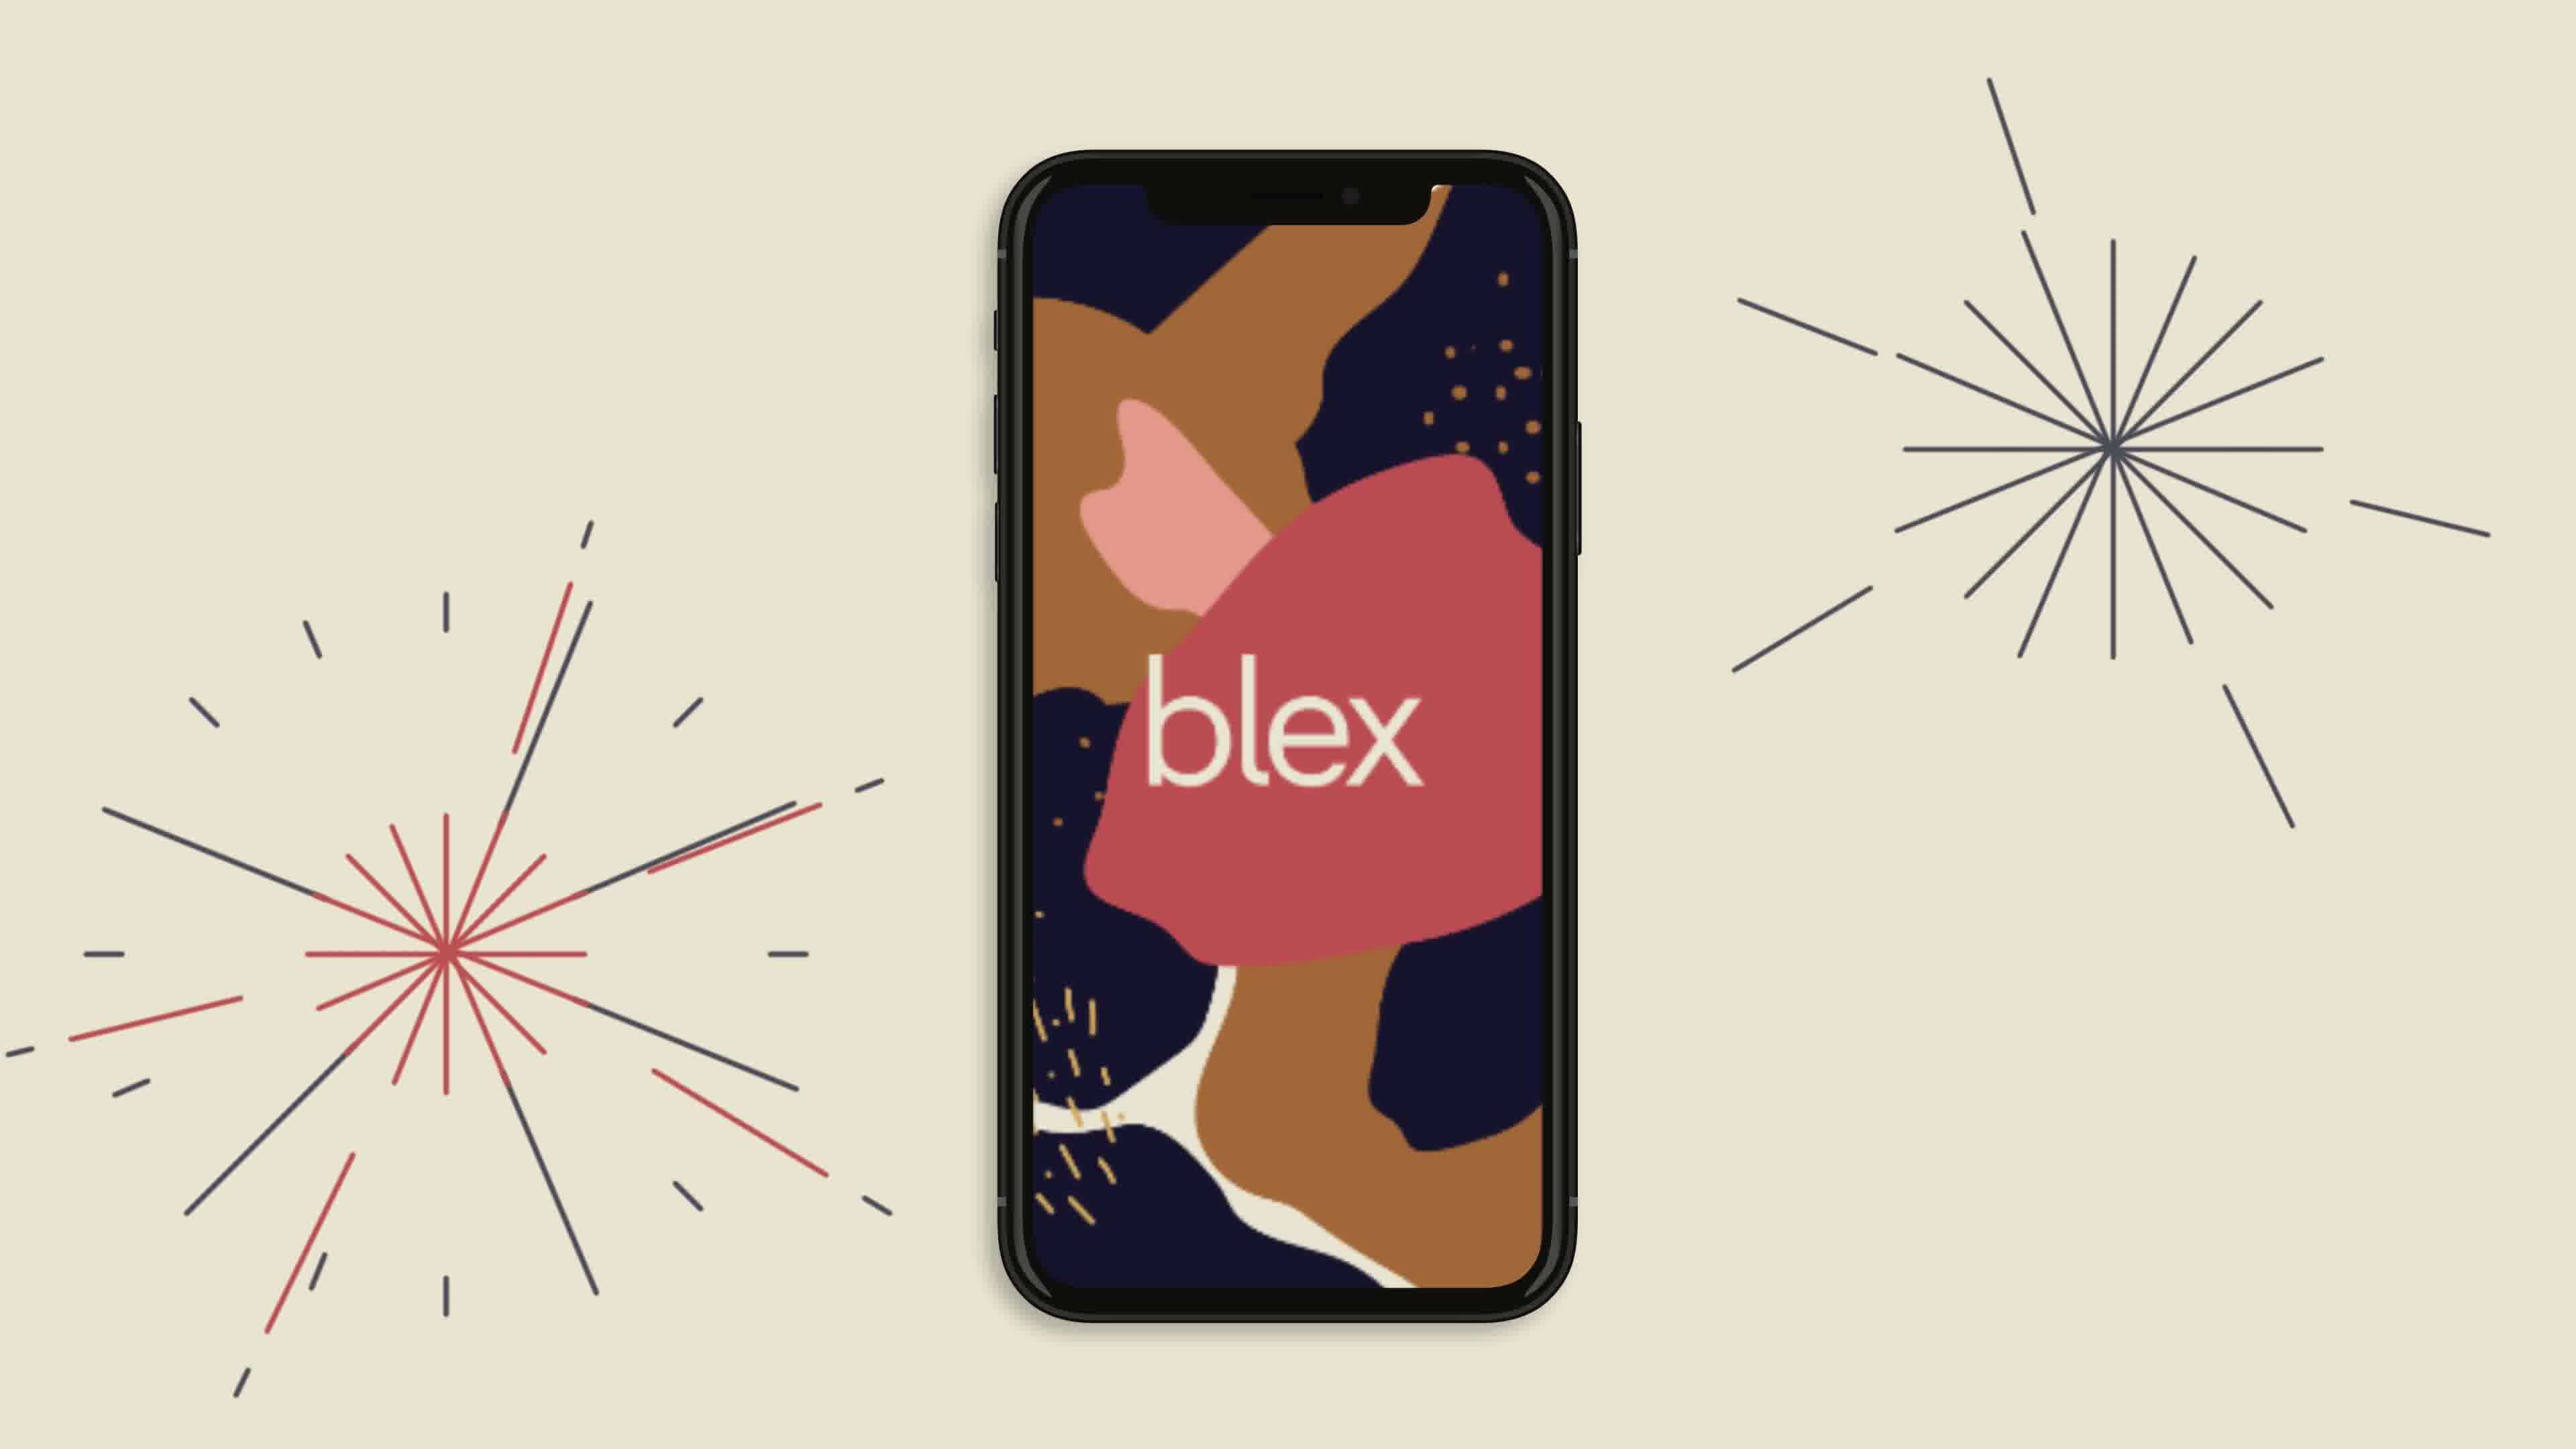 An image of the Blex app